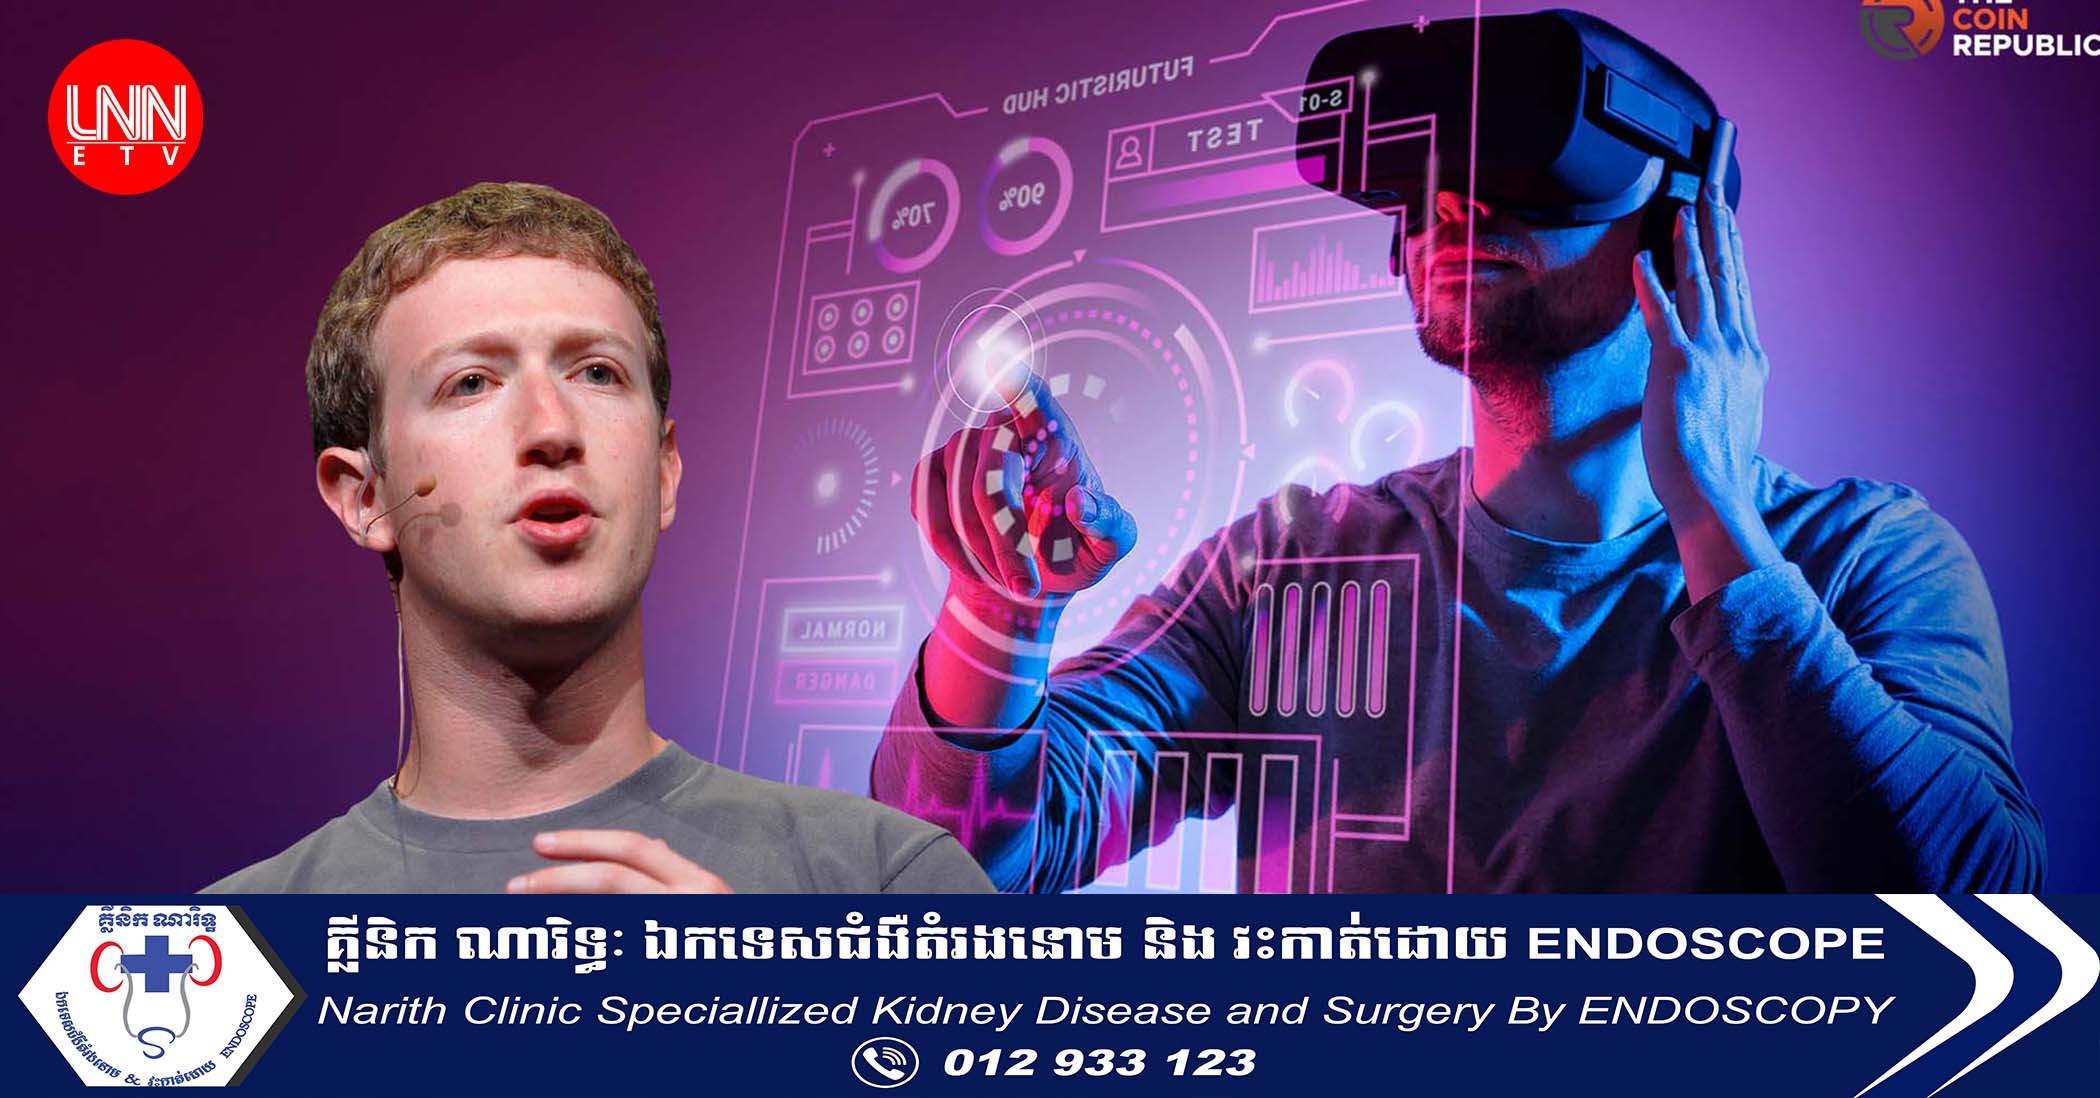 Reality Labs របស់មហាសេដ្ឋី Mark Zuckerberg ខាតលុយជាង ២១ពាន់លានដុល្លារ តាំងពីឆ្នាំមុន